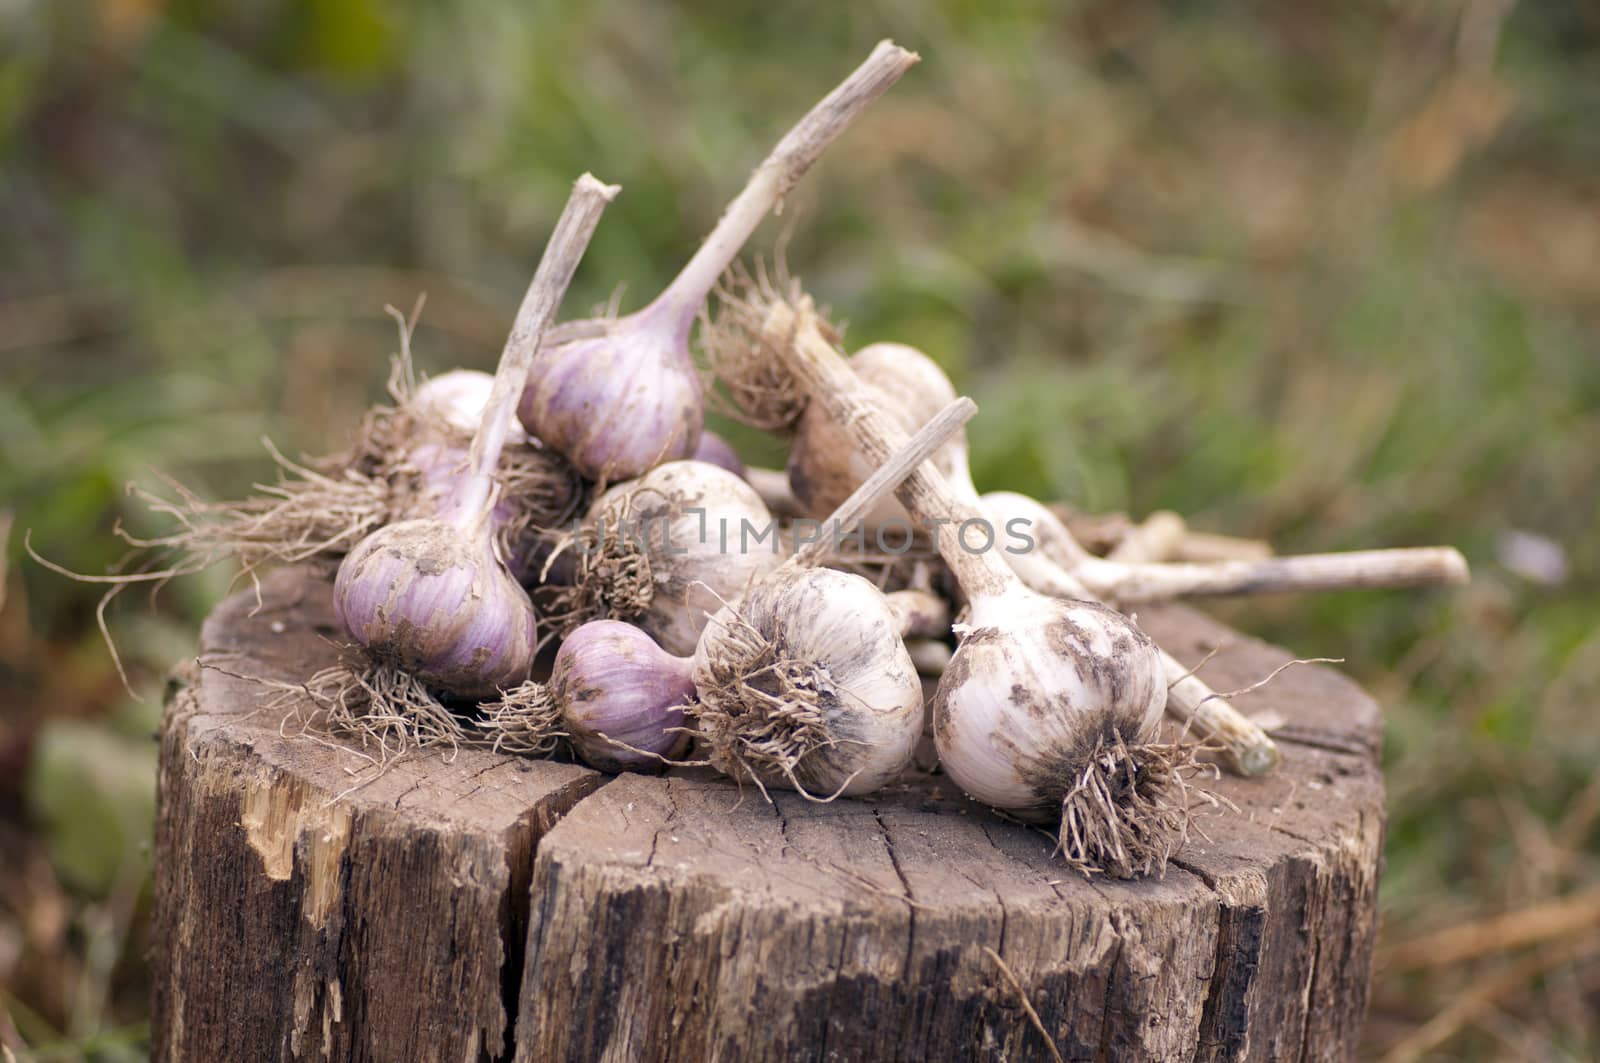 Ripe organic garlic by dred